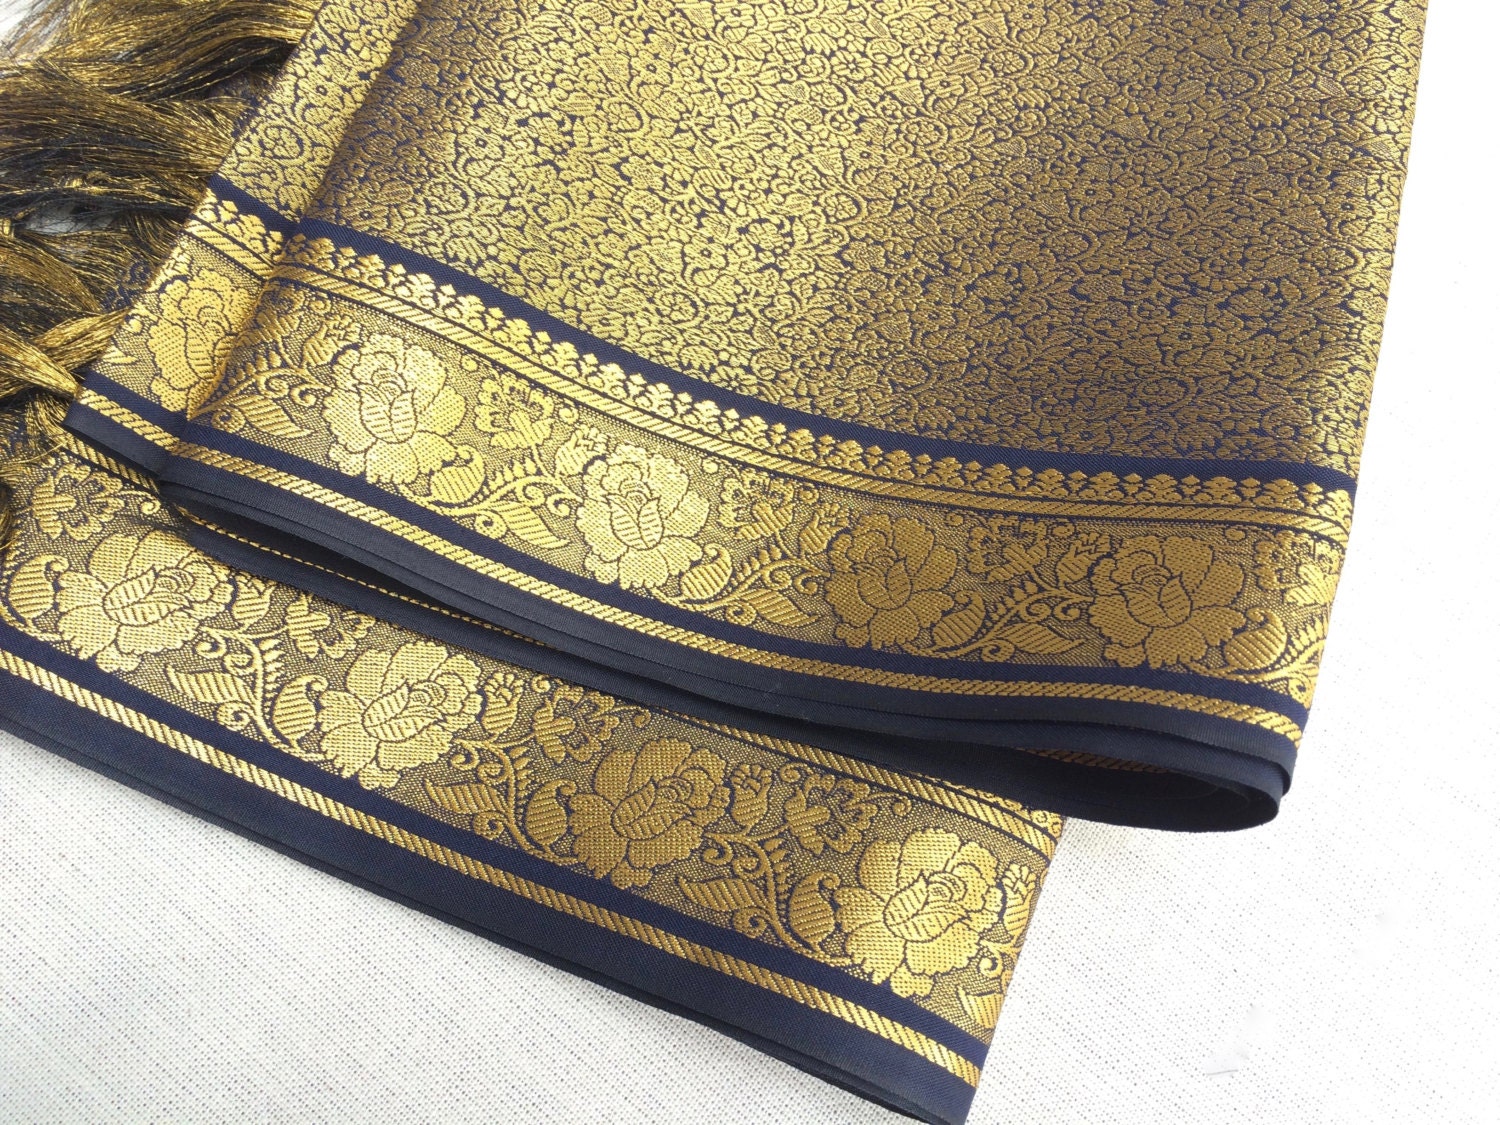 Indian Silk Fabric Indian Fabric Gold Brocade Fabric Silk